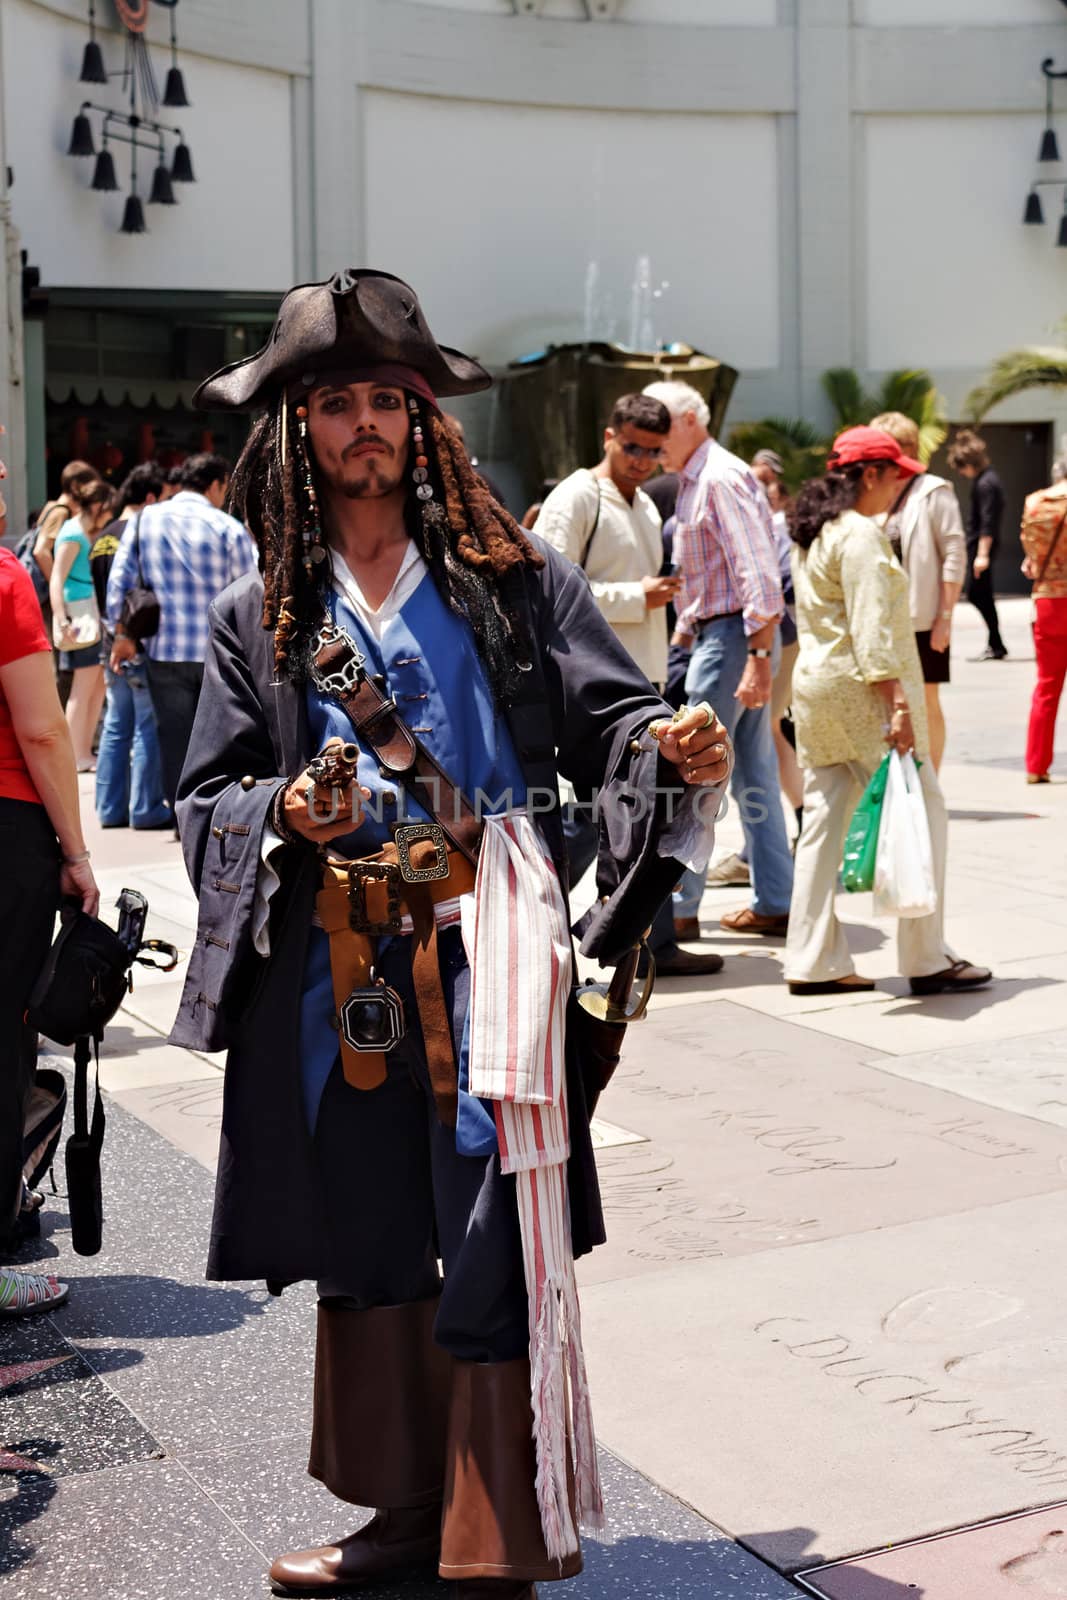 Captain Jack Sparrow by Roka